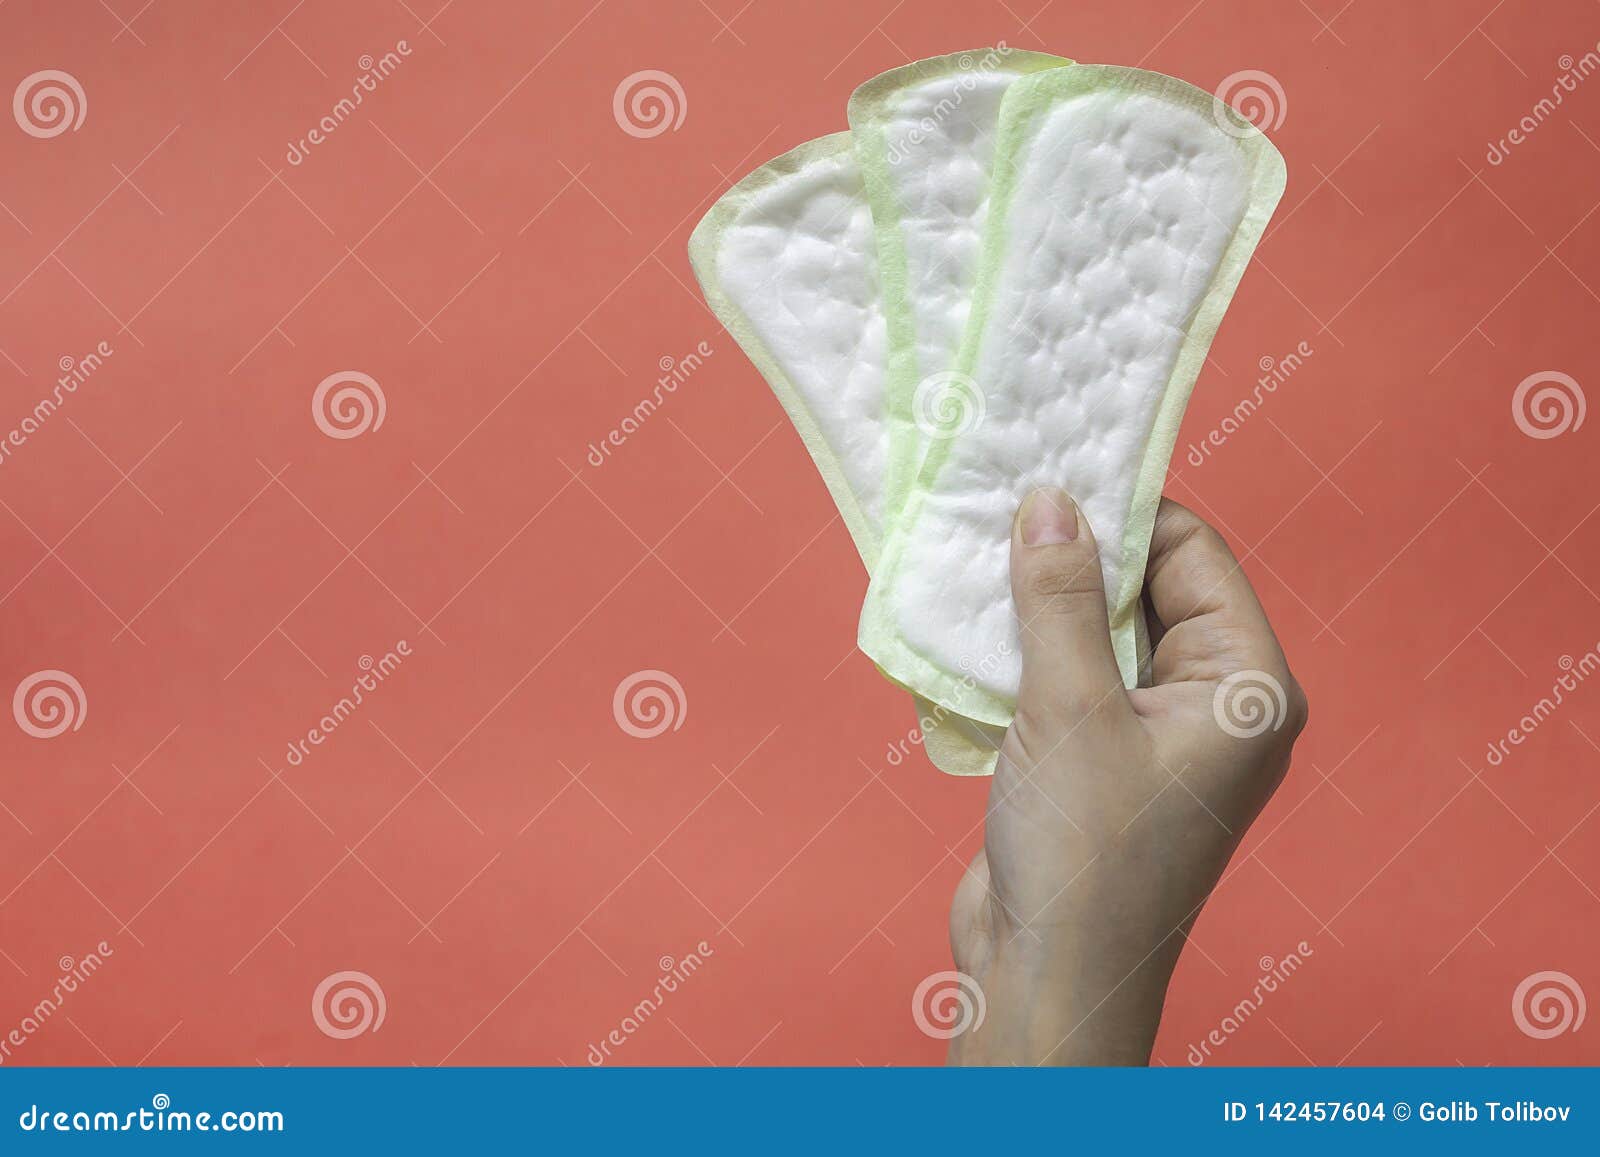 woman`s hands holding feminine hygiene pads. hands of female hold menstrual pads or sanitary napkins for women